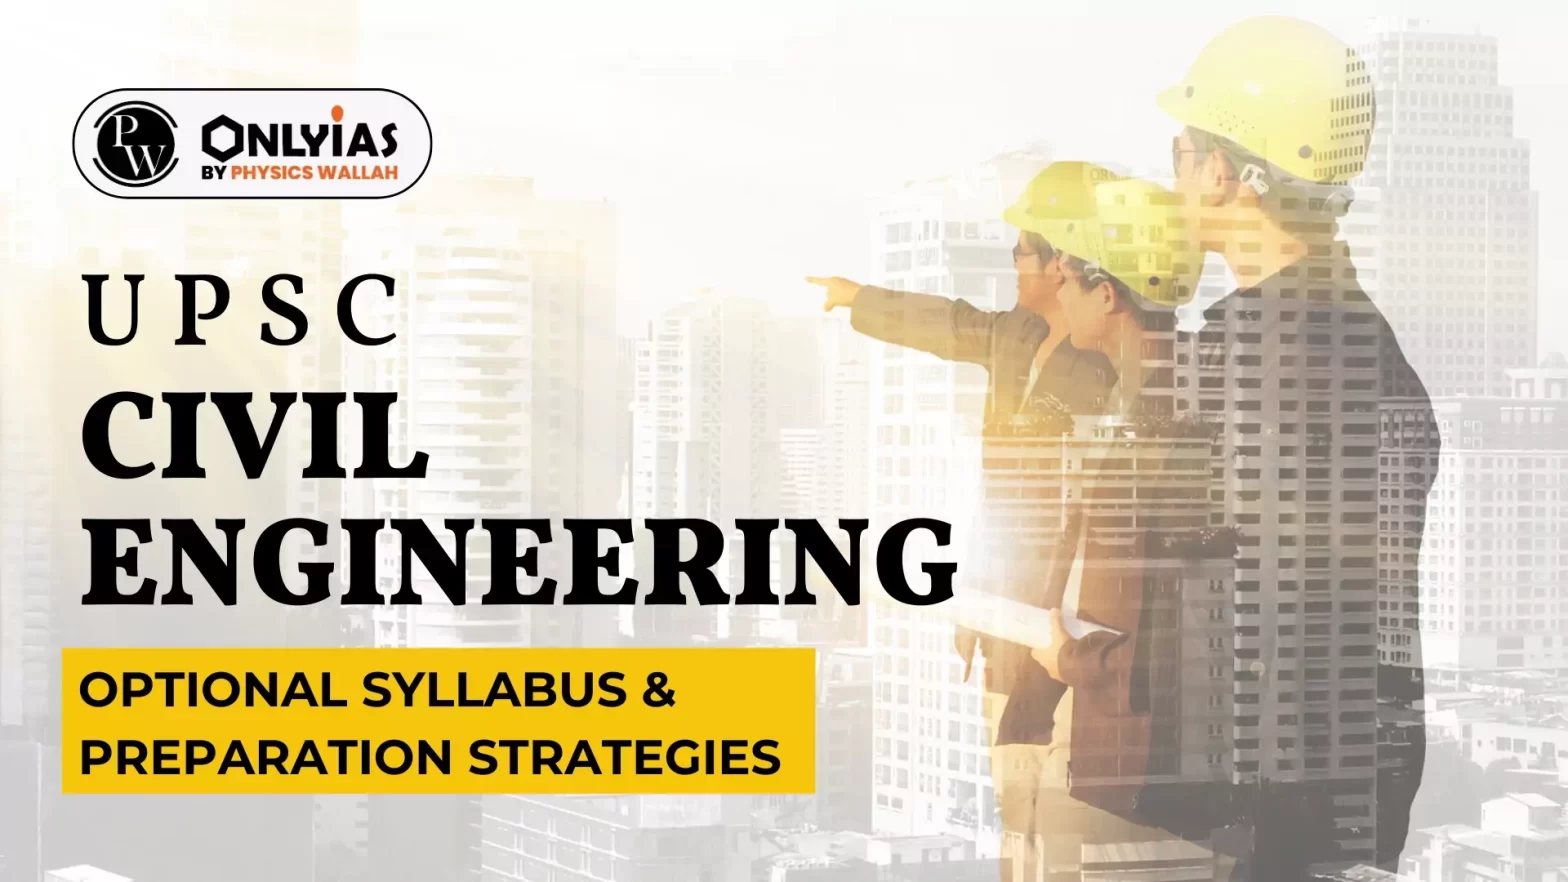 UPSC Civil Engineering Optional Syllabus & Preparation Strategies